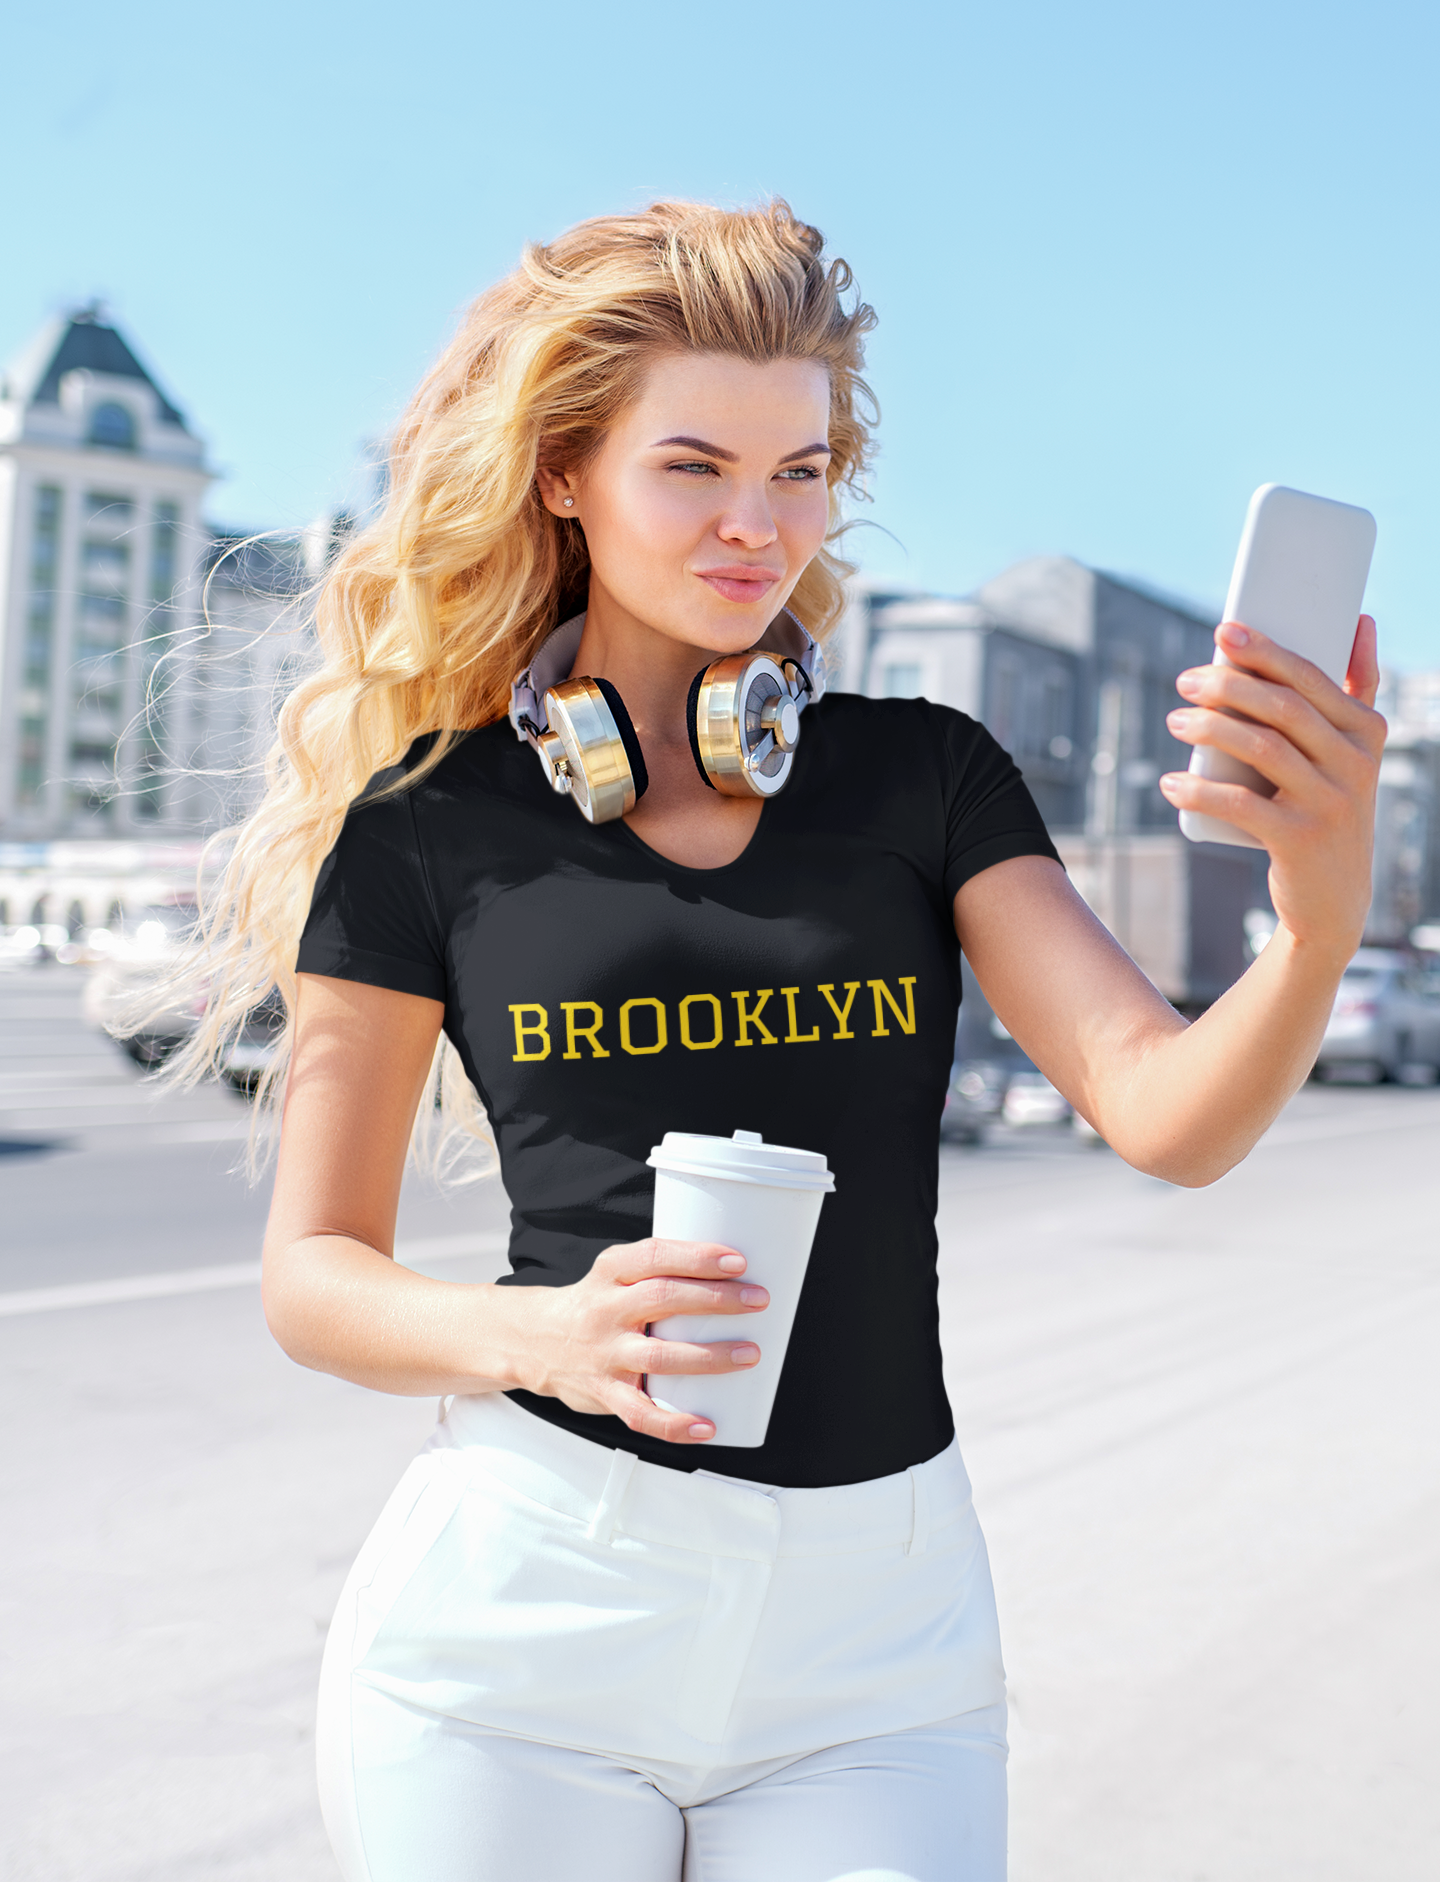 Brooklyn Yellow Font Black Round Neck T-Shirt for Women. 